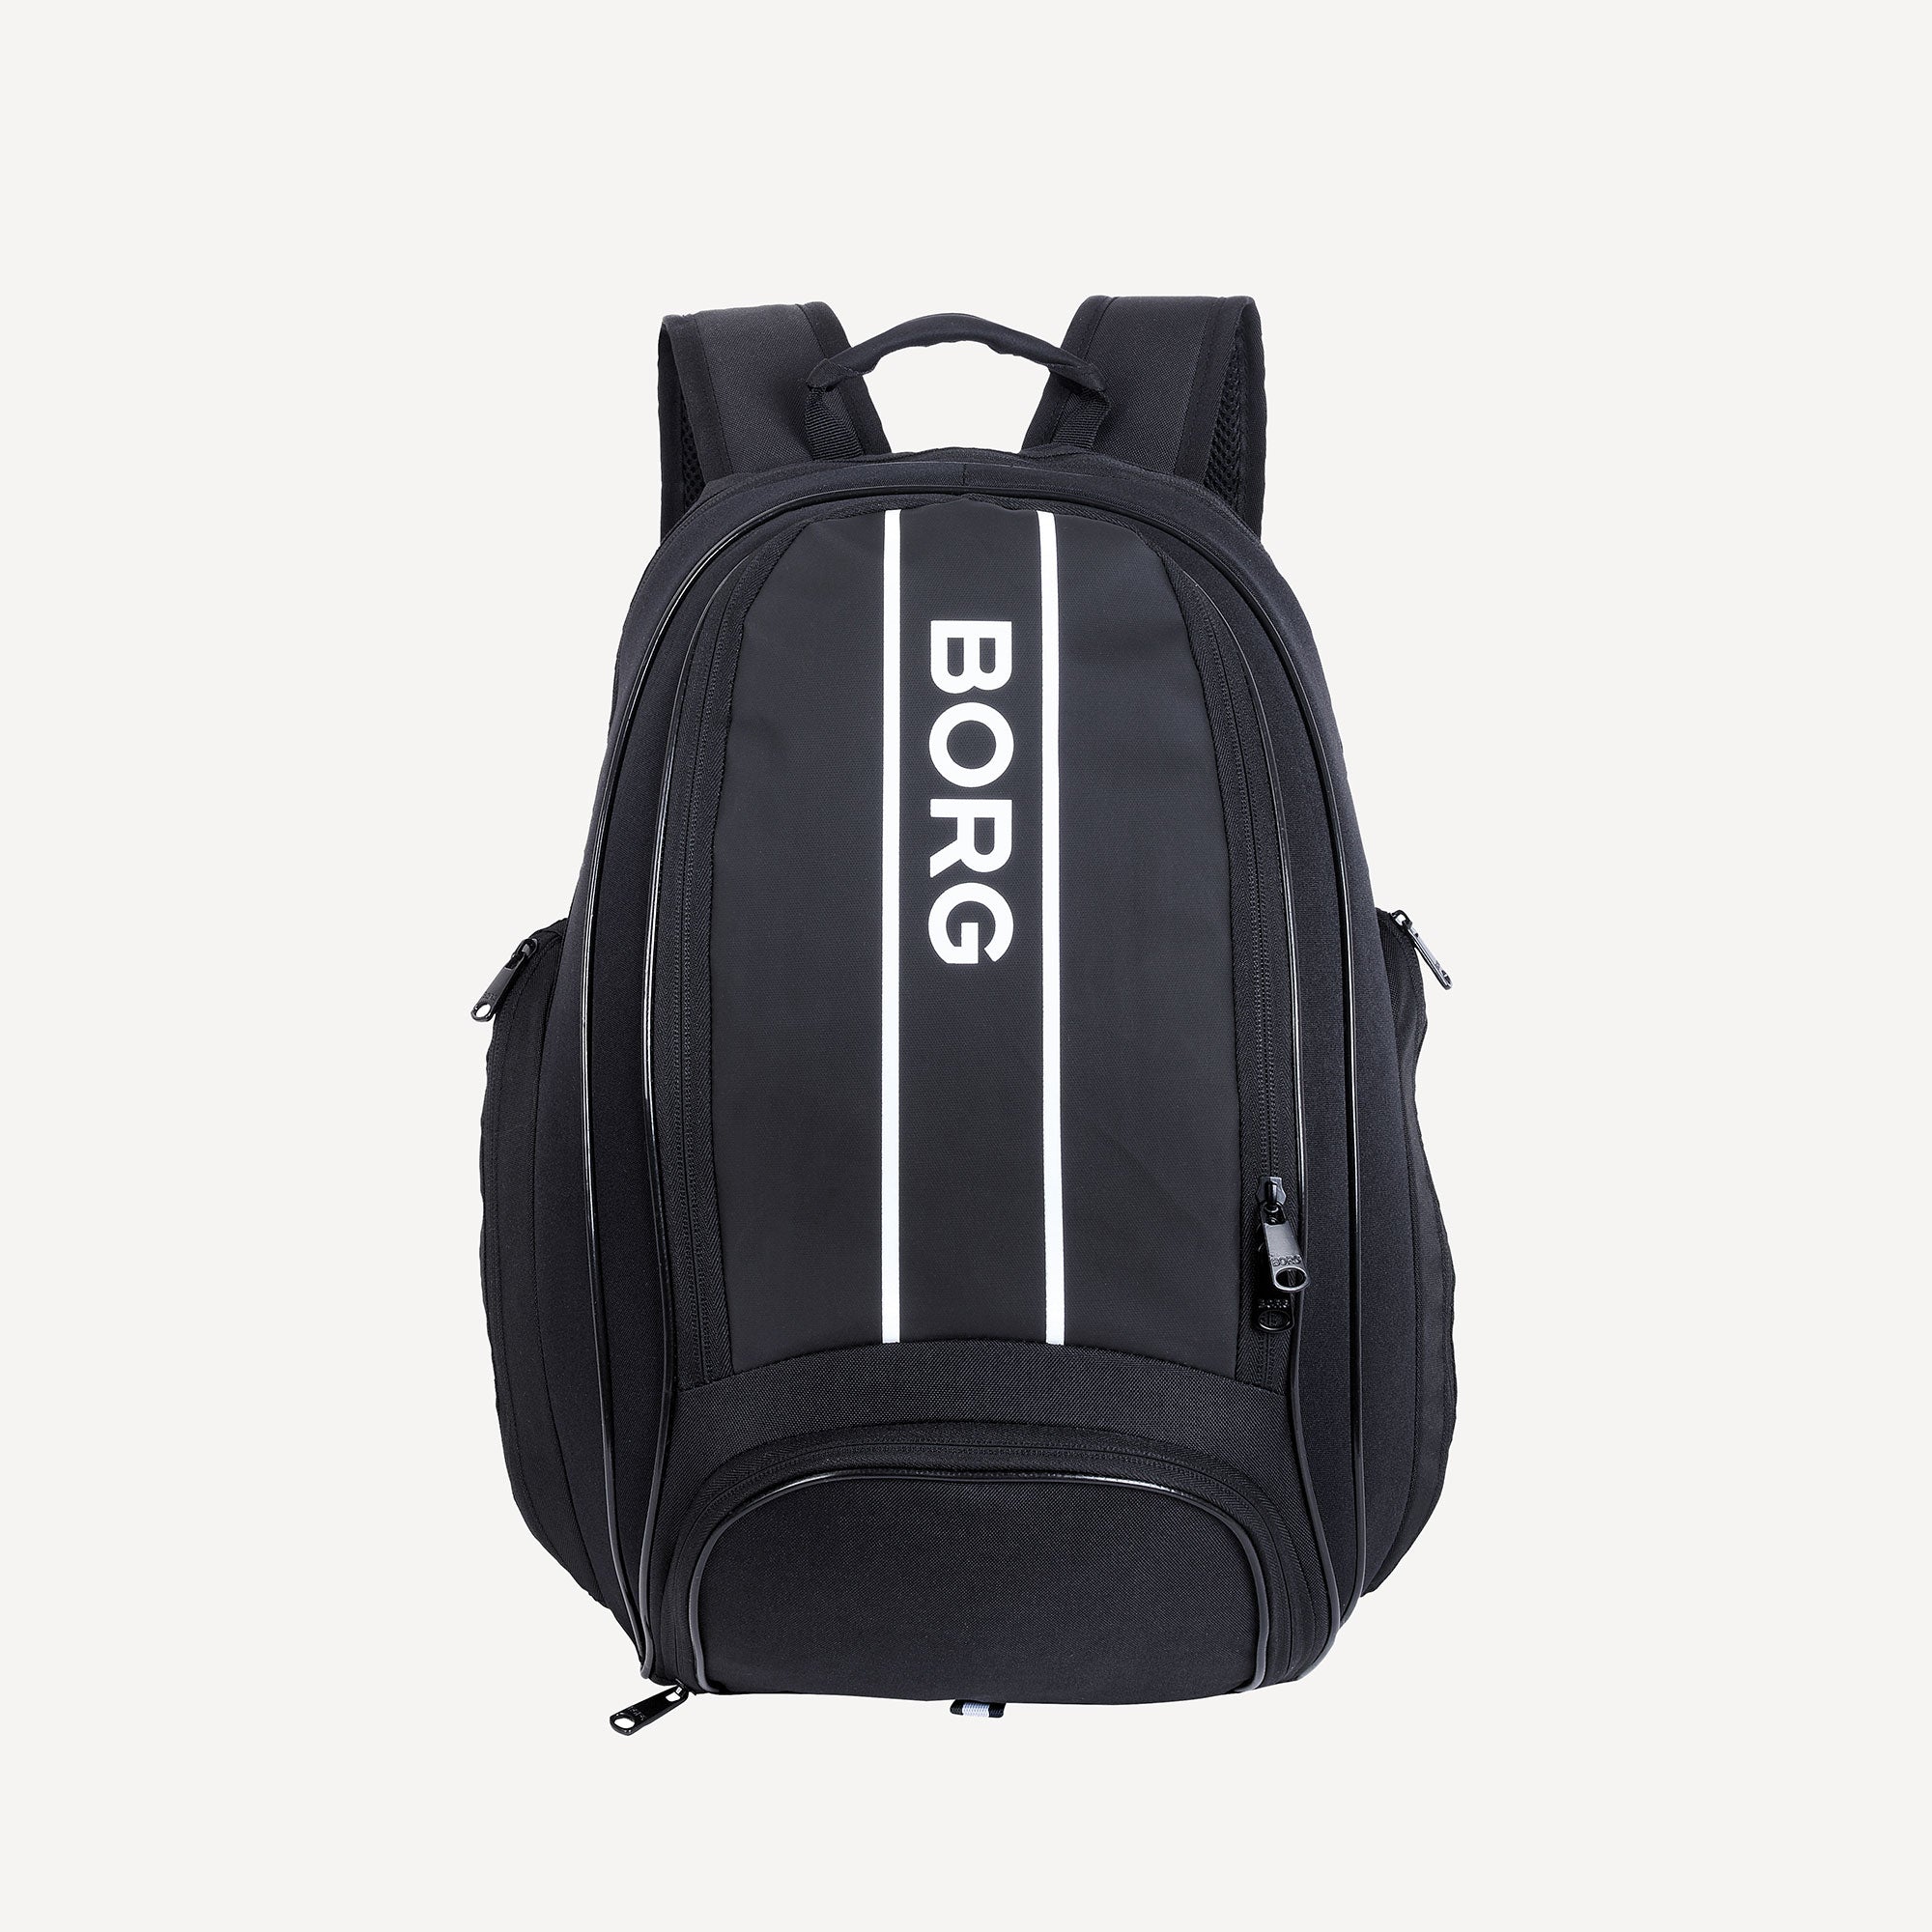 Björn Borg Ace Tennis Backpack - Black (1)